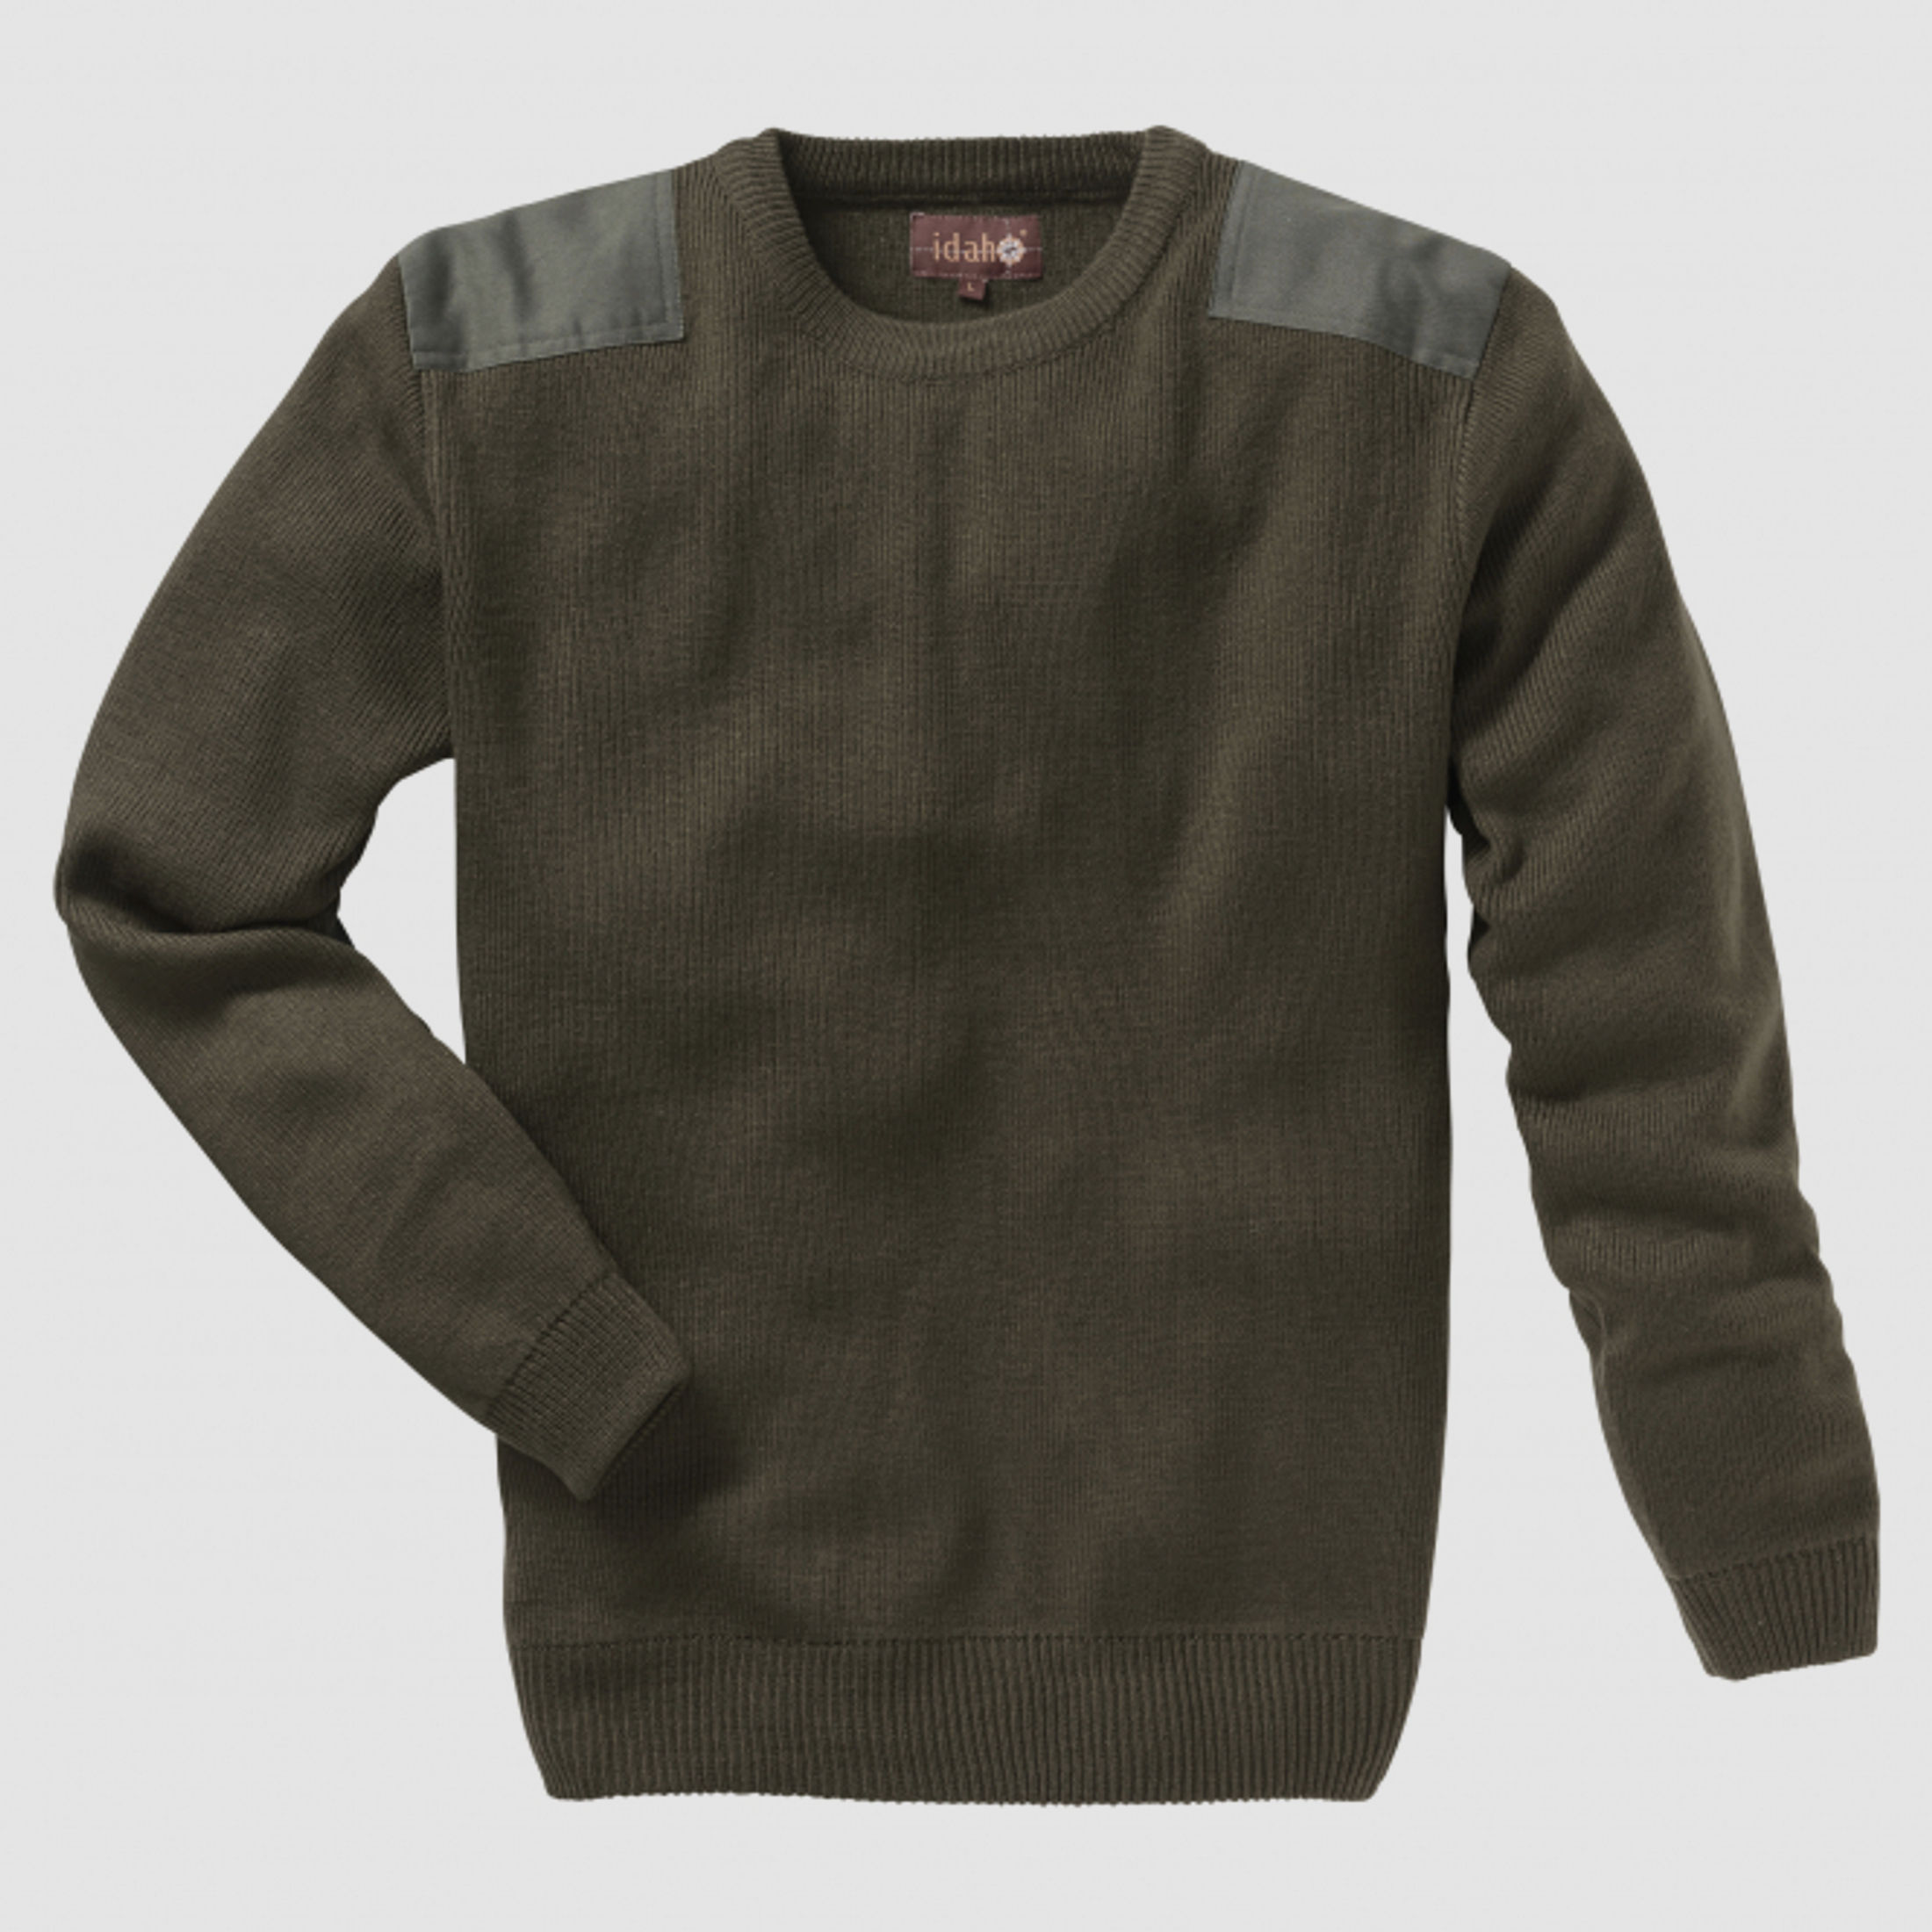 Idaho       Idaho   Herren Jagd Sweater Commando